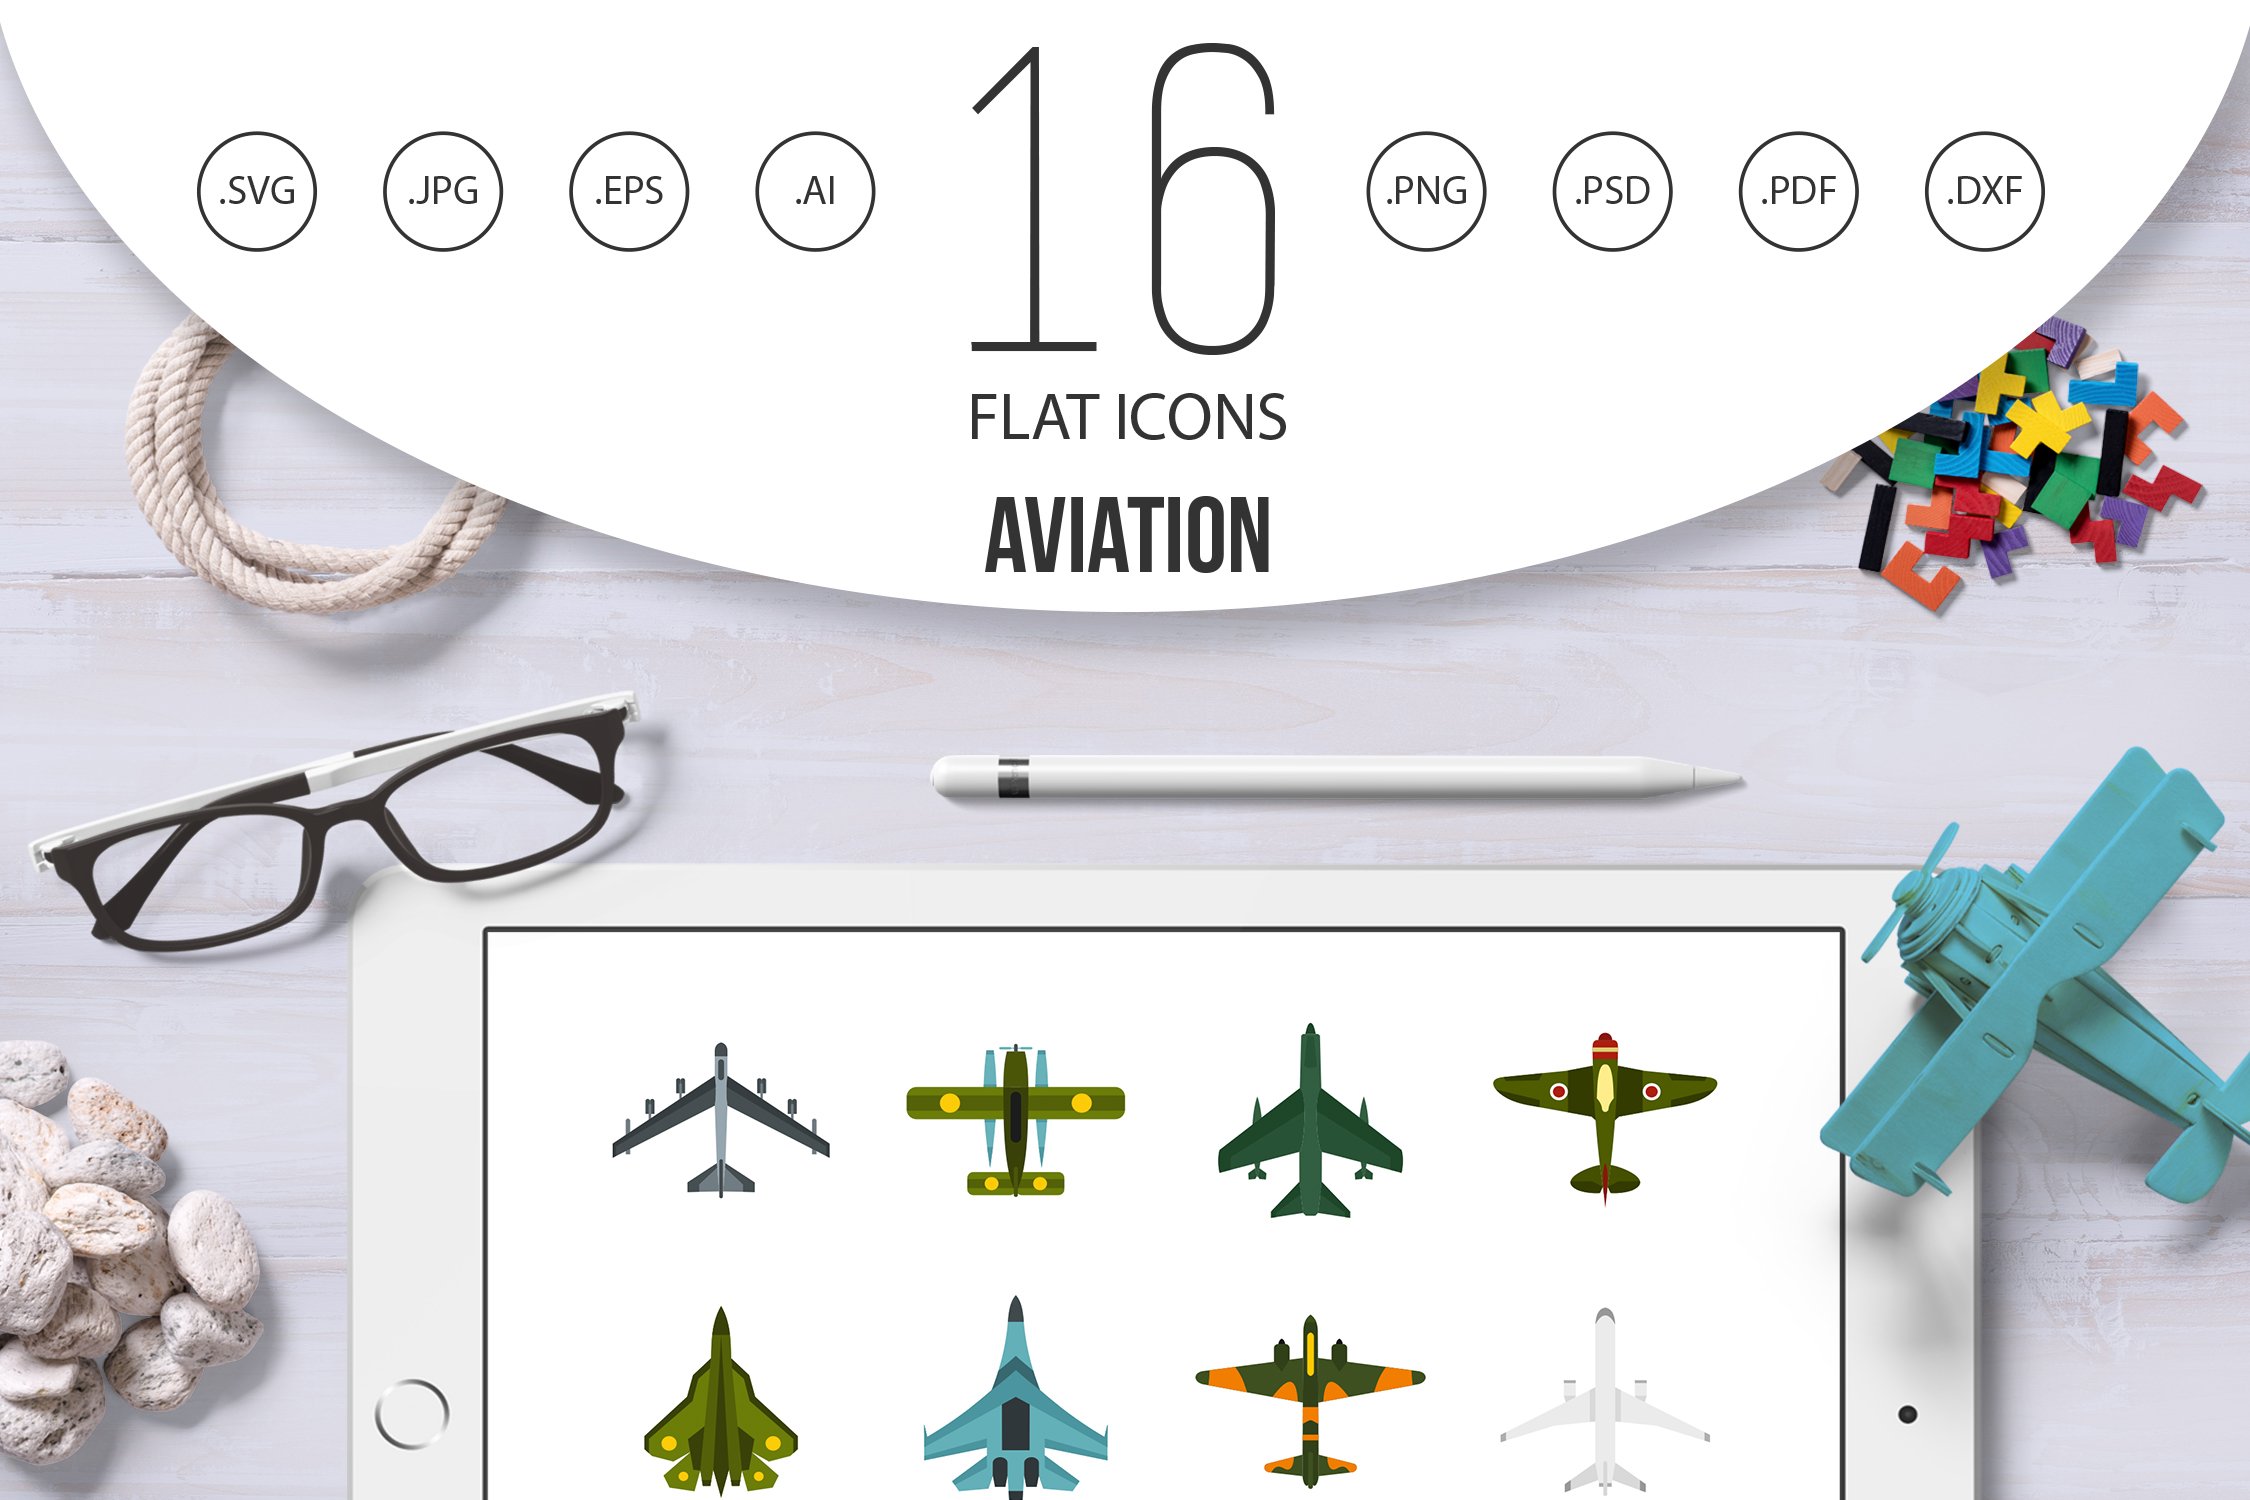 Aviation icons set, flat style cover image.